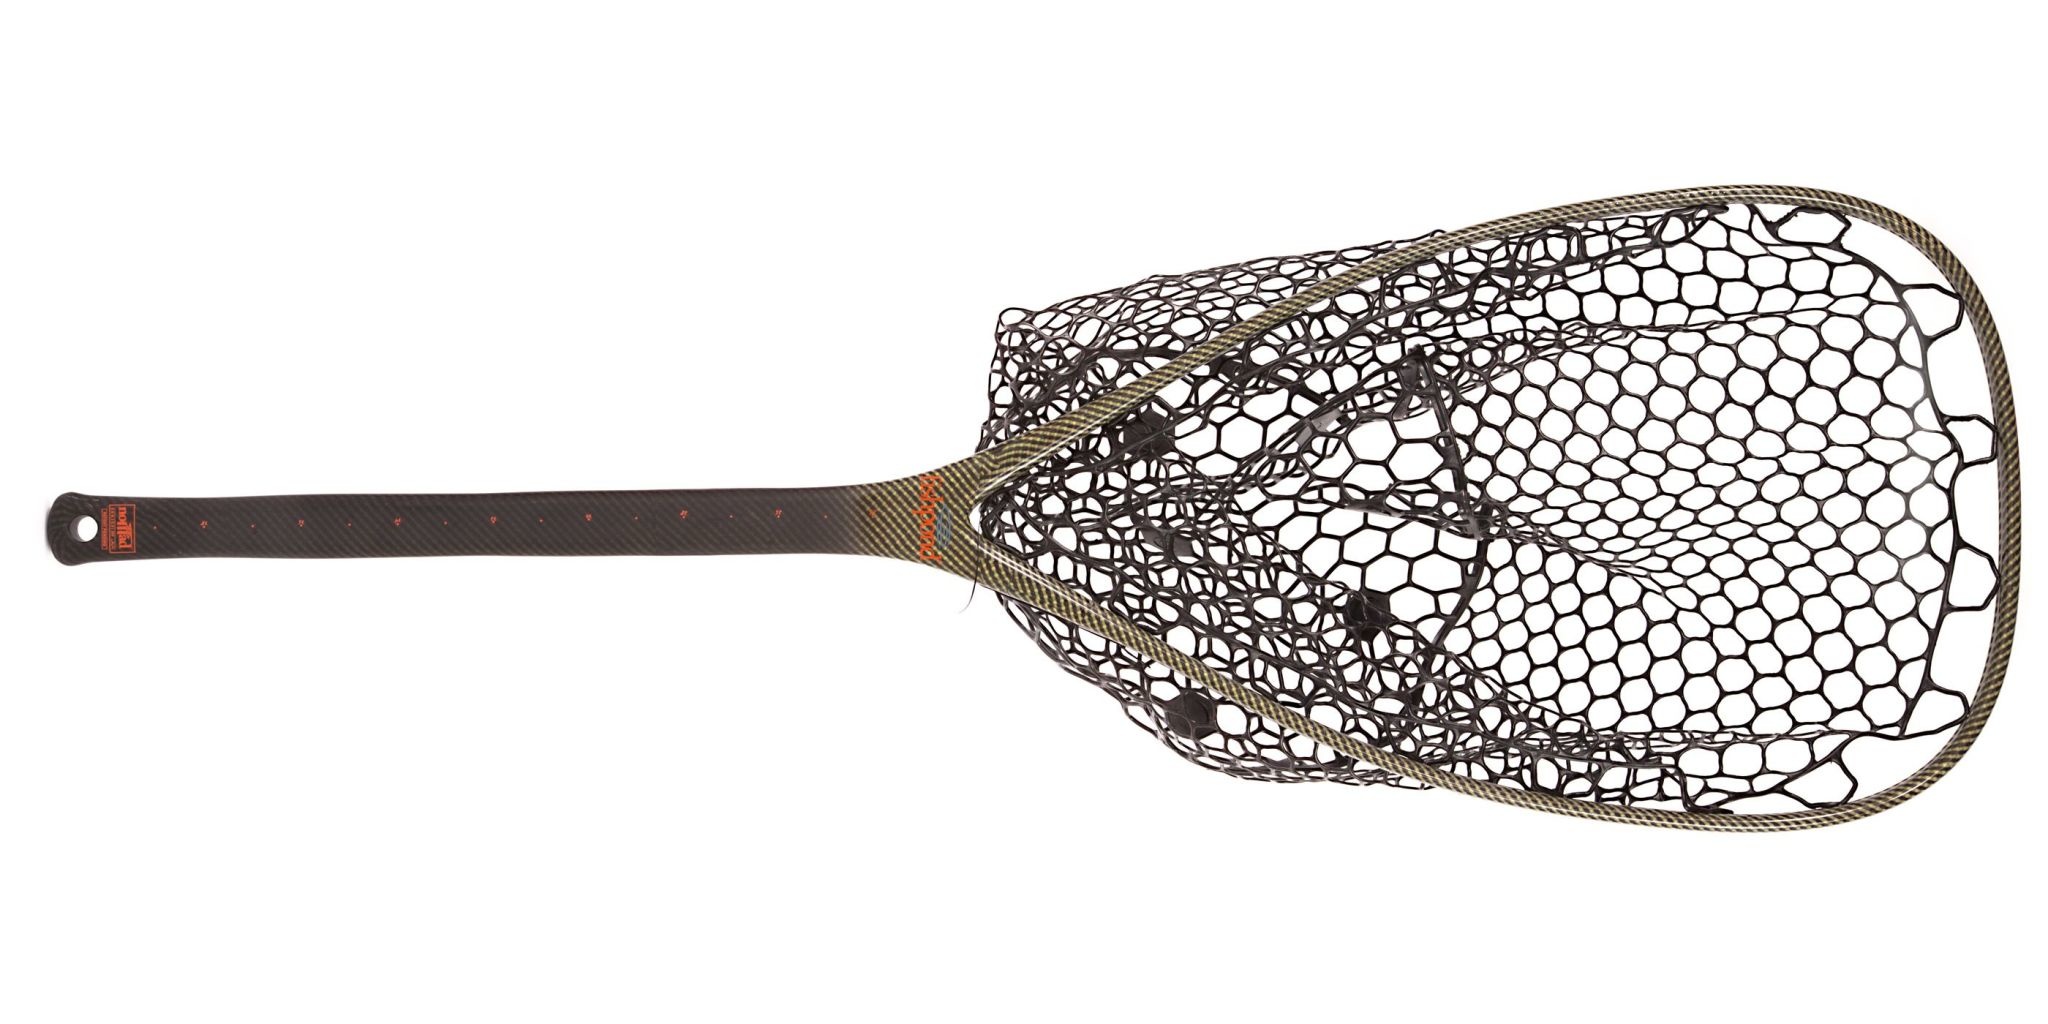 fishpond Nomad Native Net -